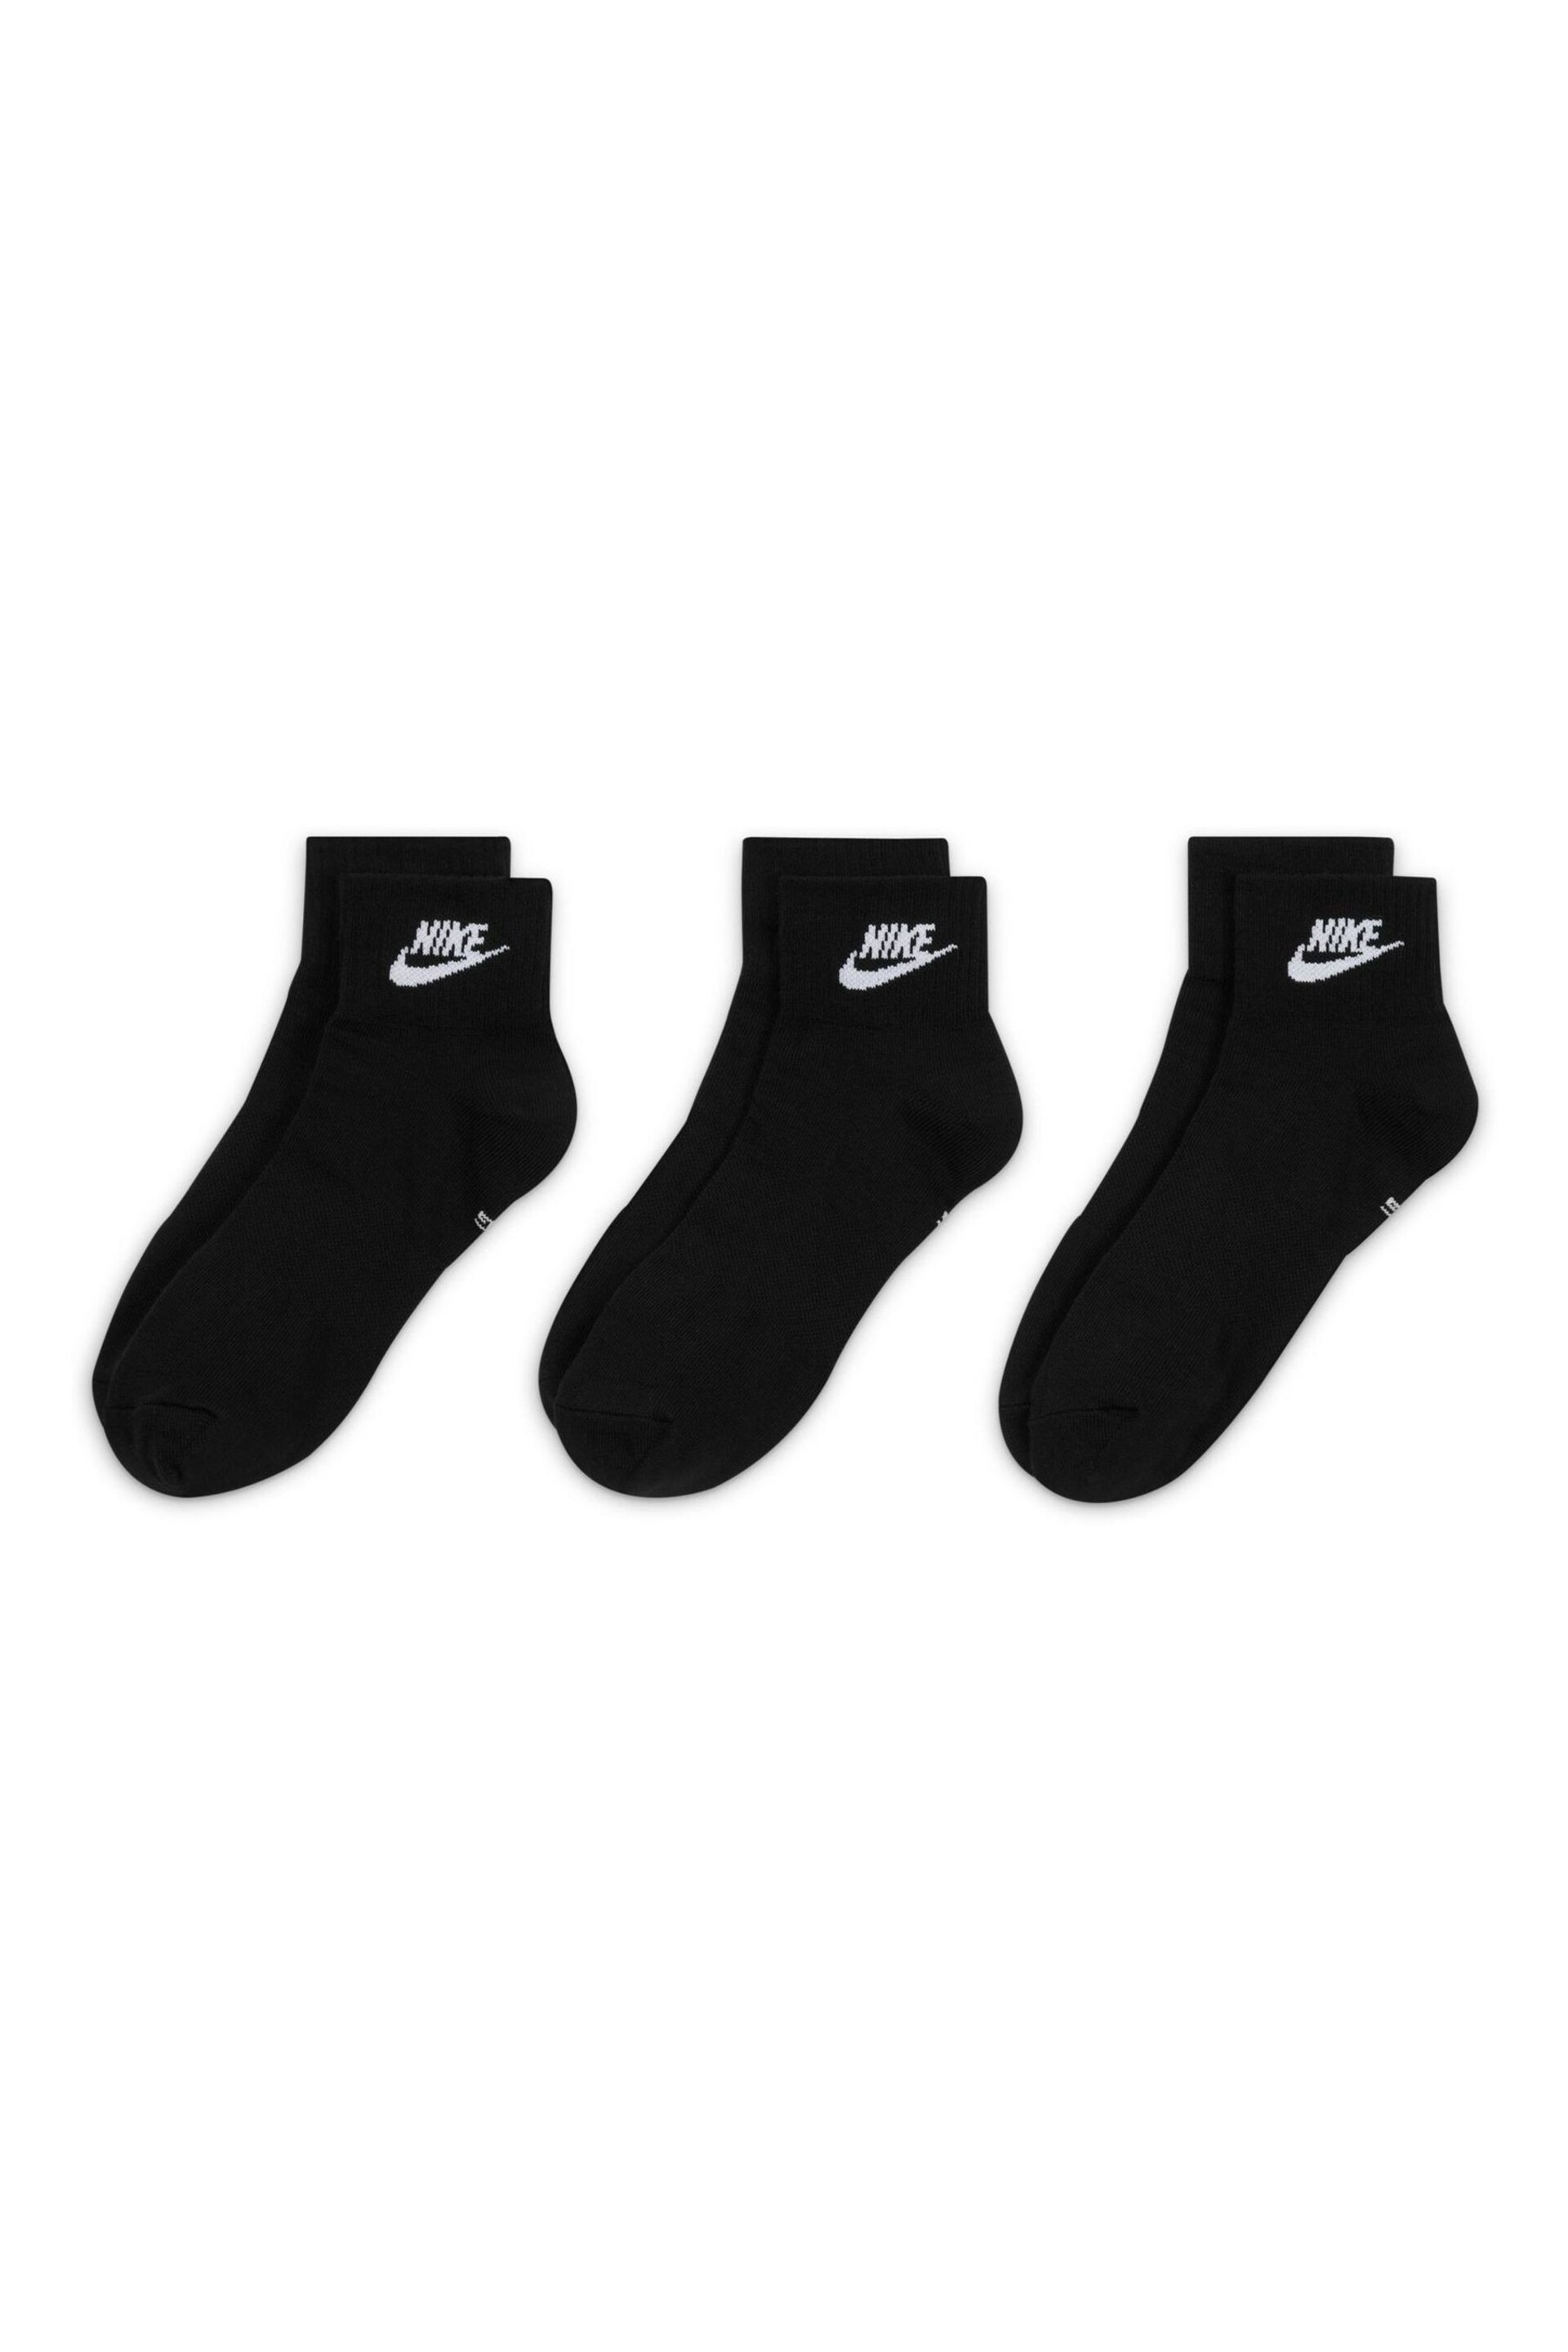 Nike Black Everyday Essentials Socks 3 Pack - Image 2 of 4